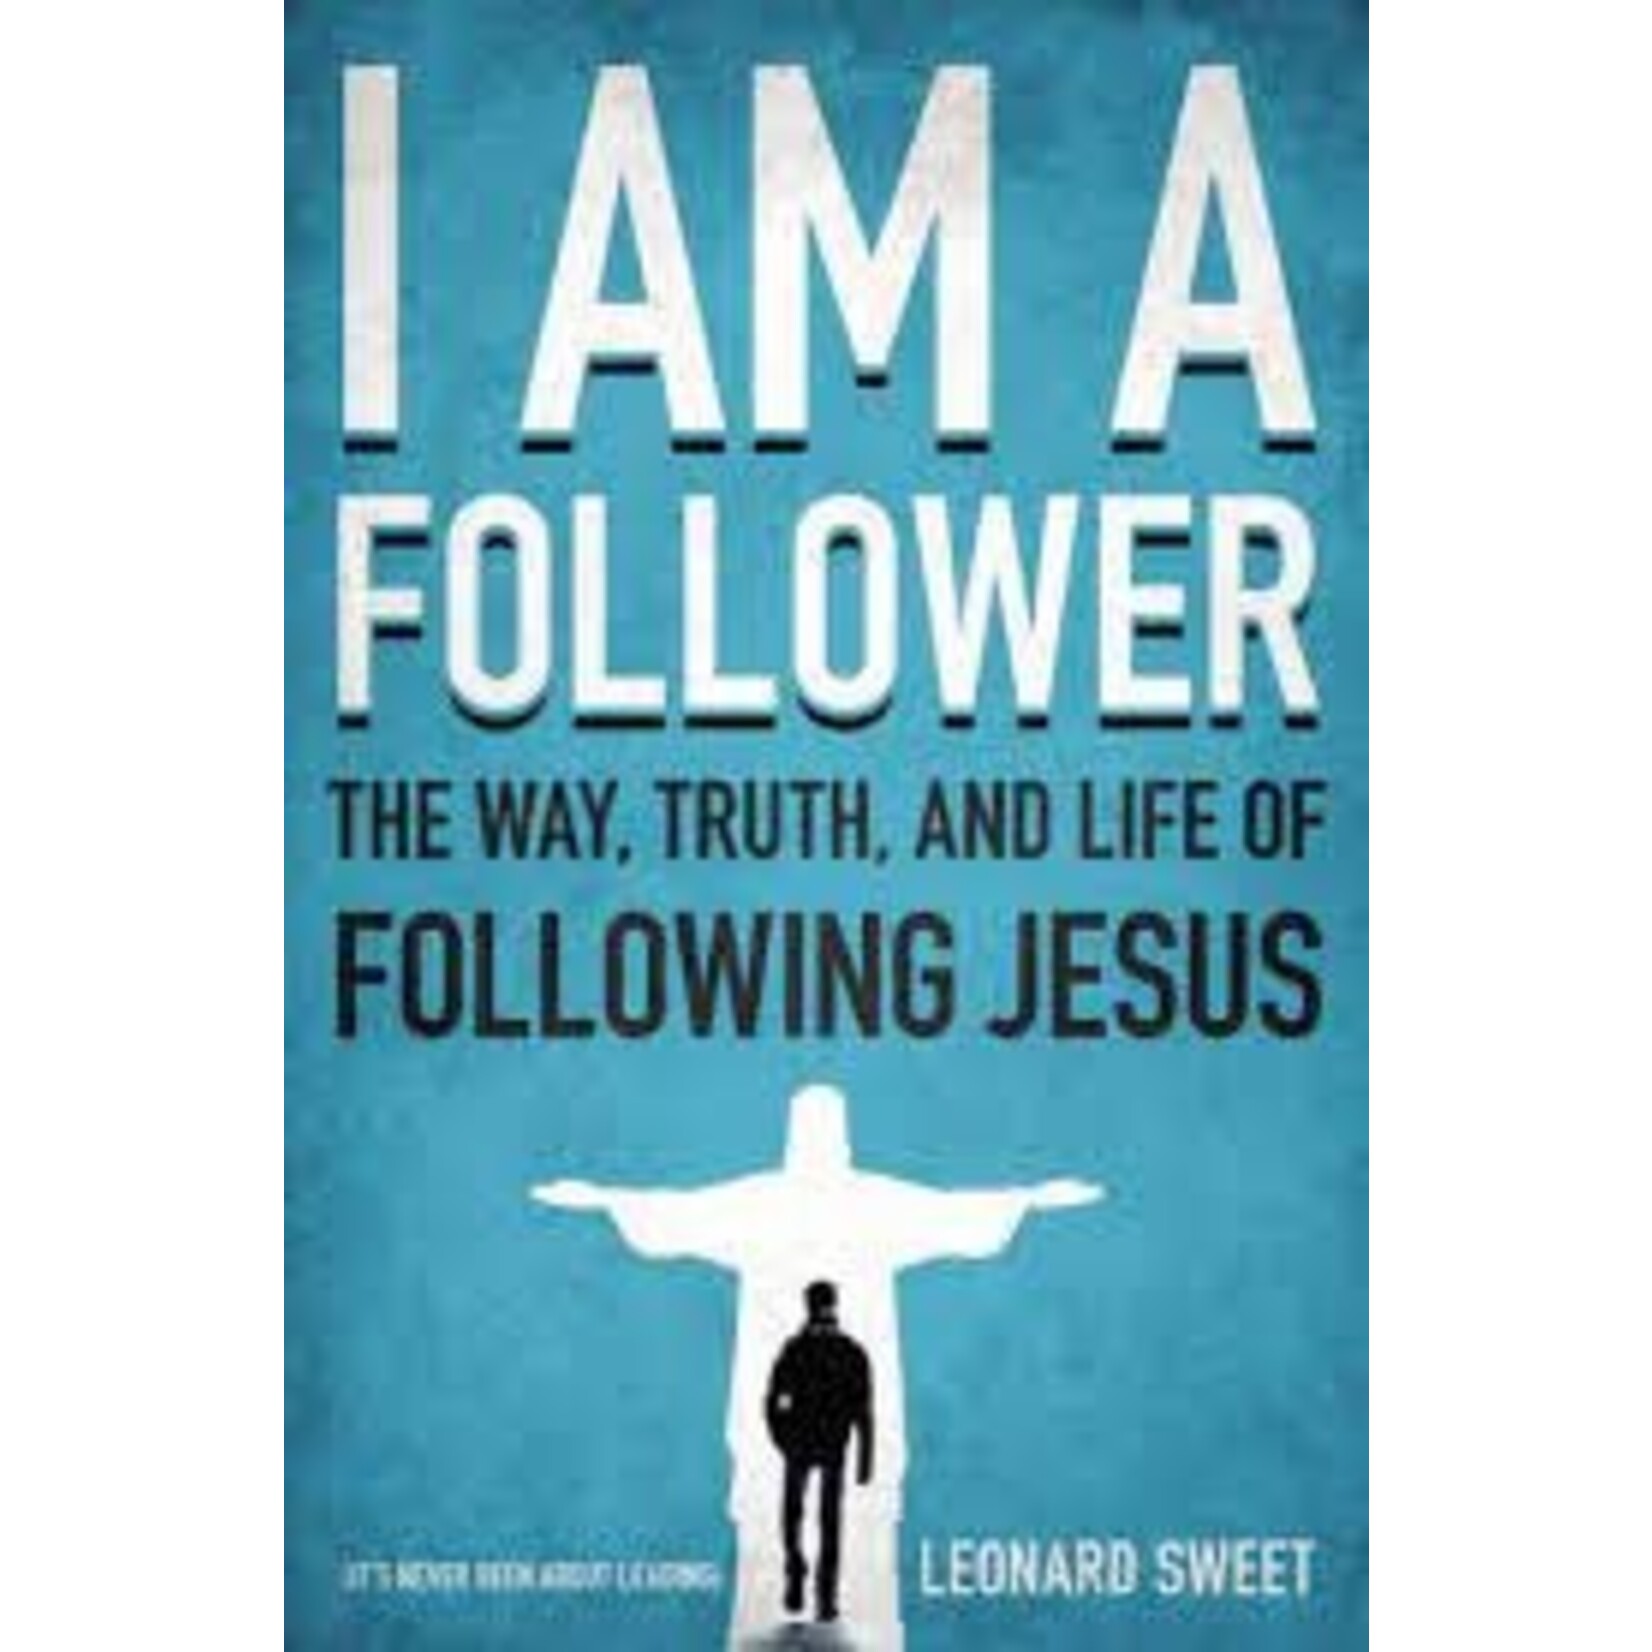 I am Follower